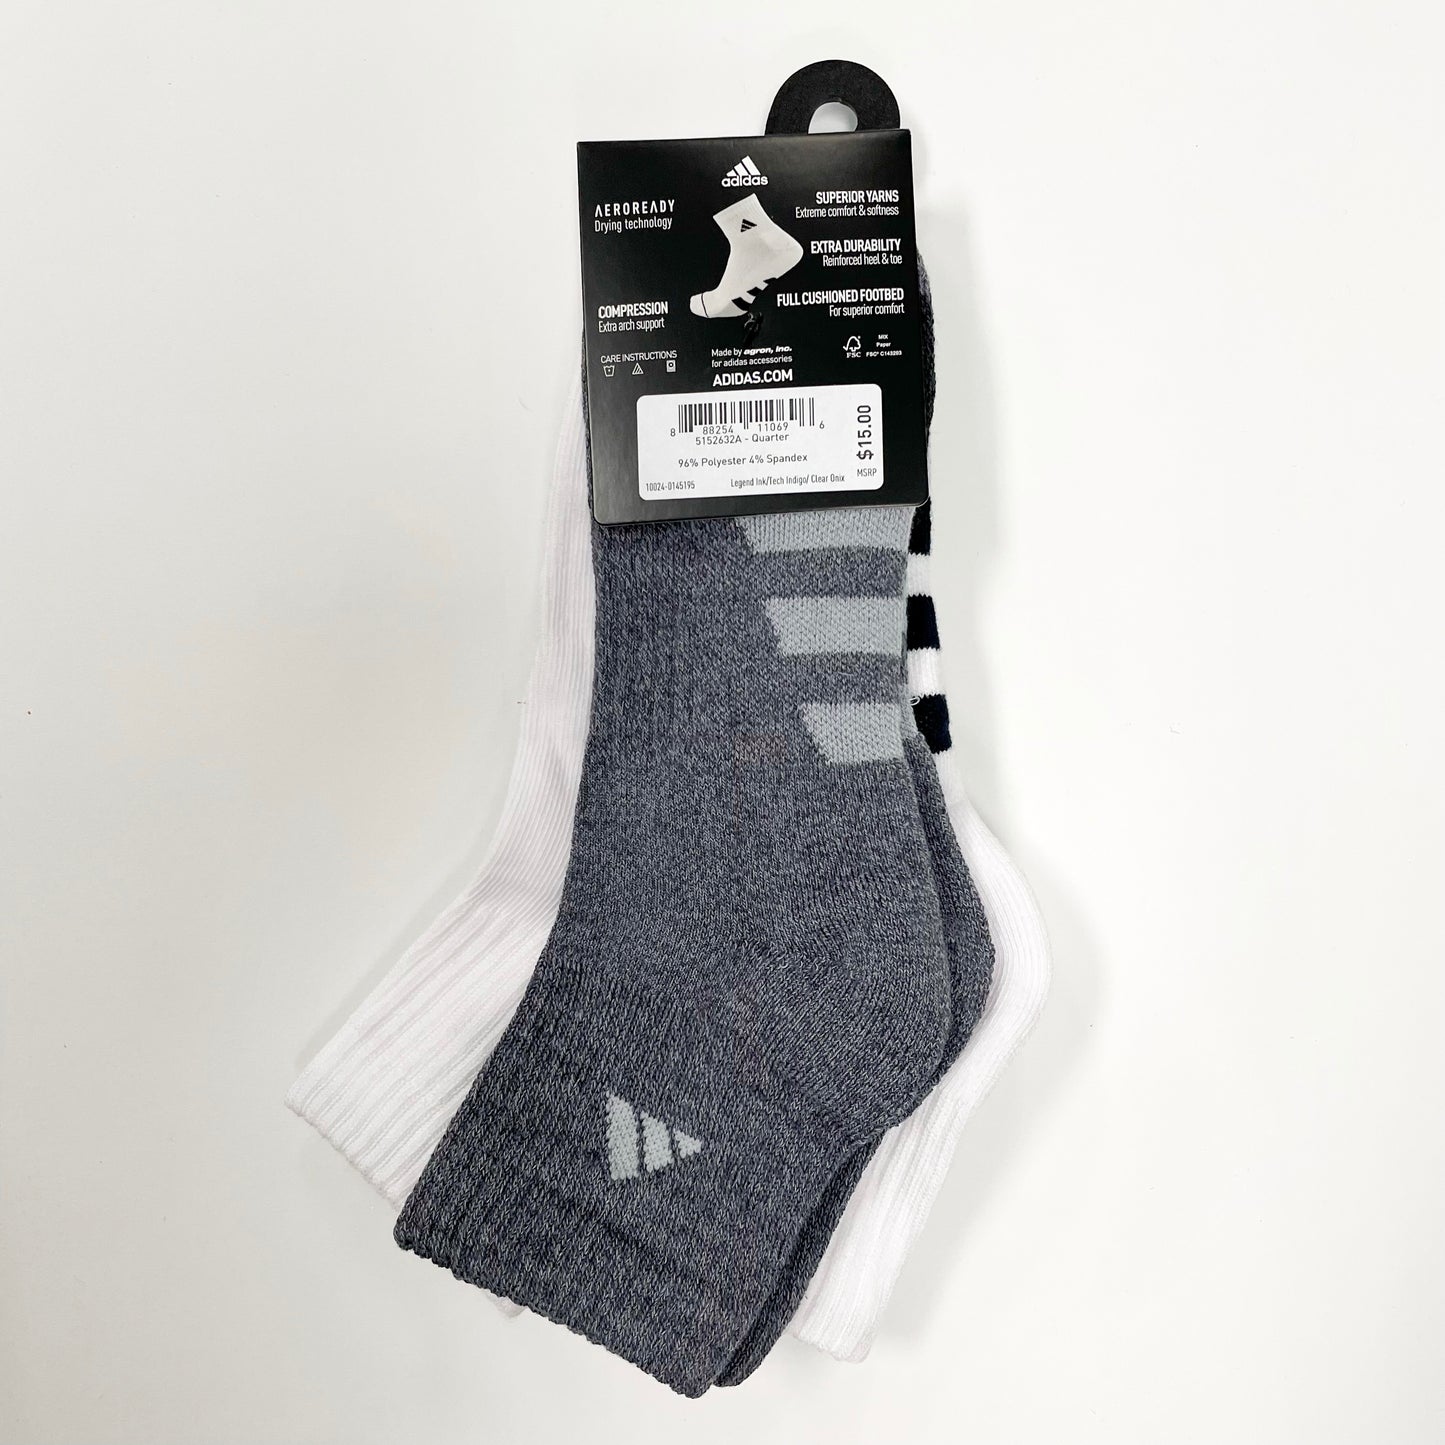 Adidas Men's Cushion quarter-cut 3 pairs socks